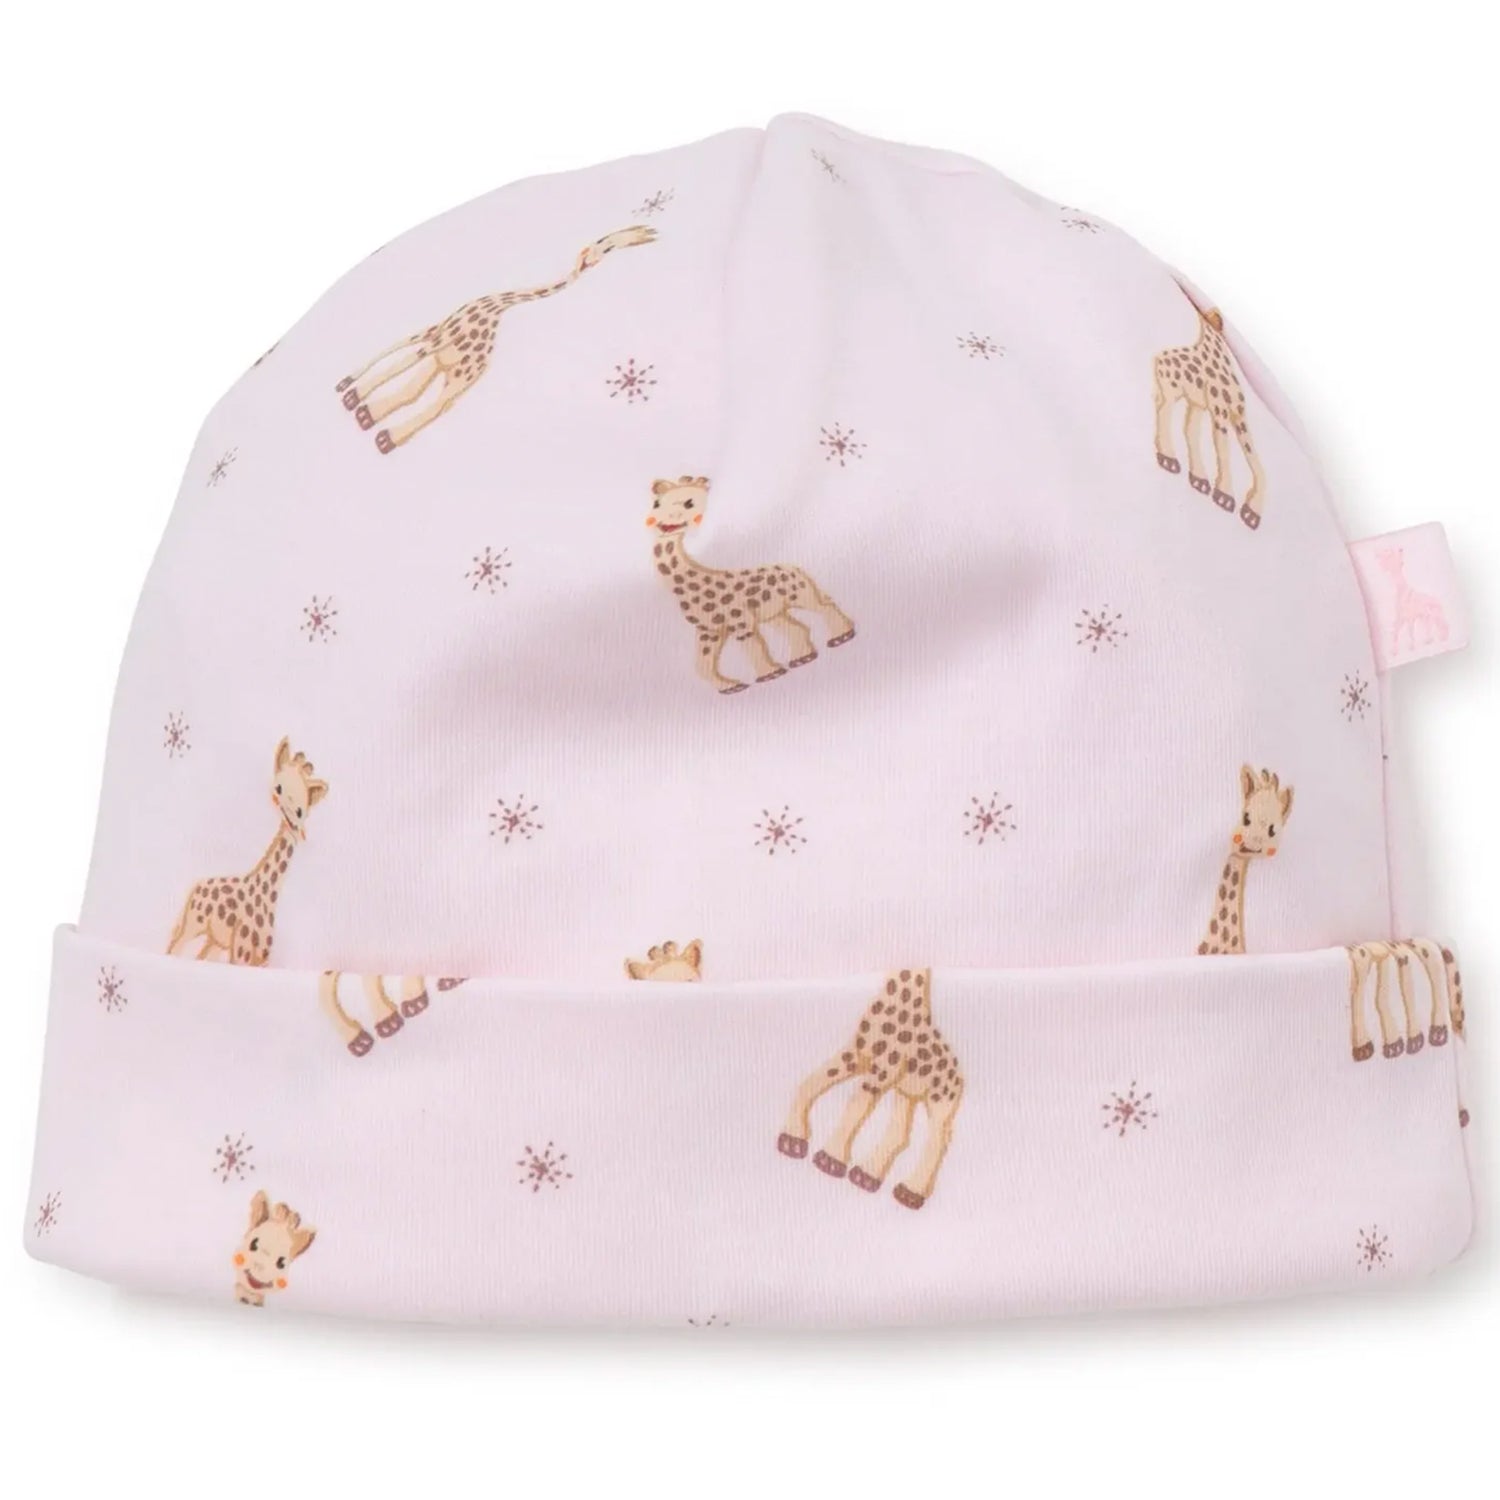 Sophie La Girafe Pink Print Hat